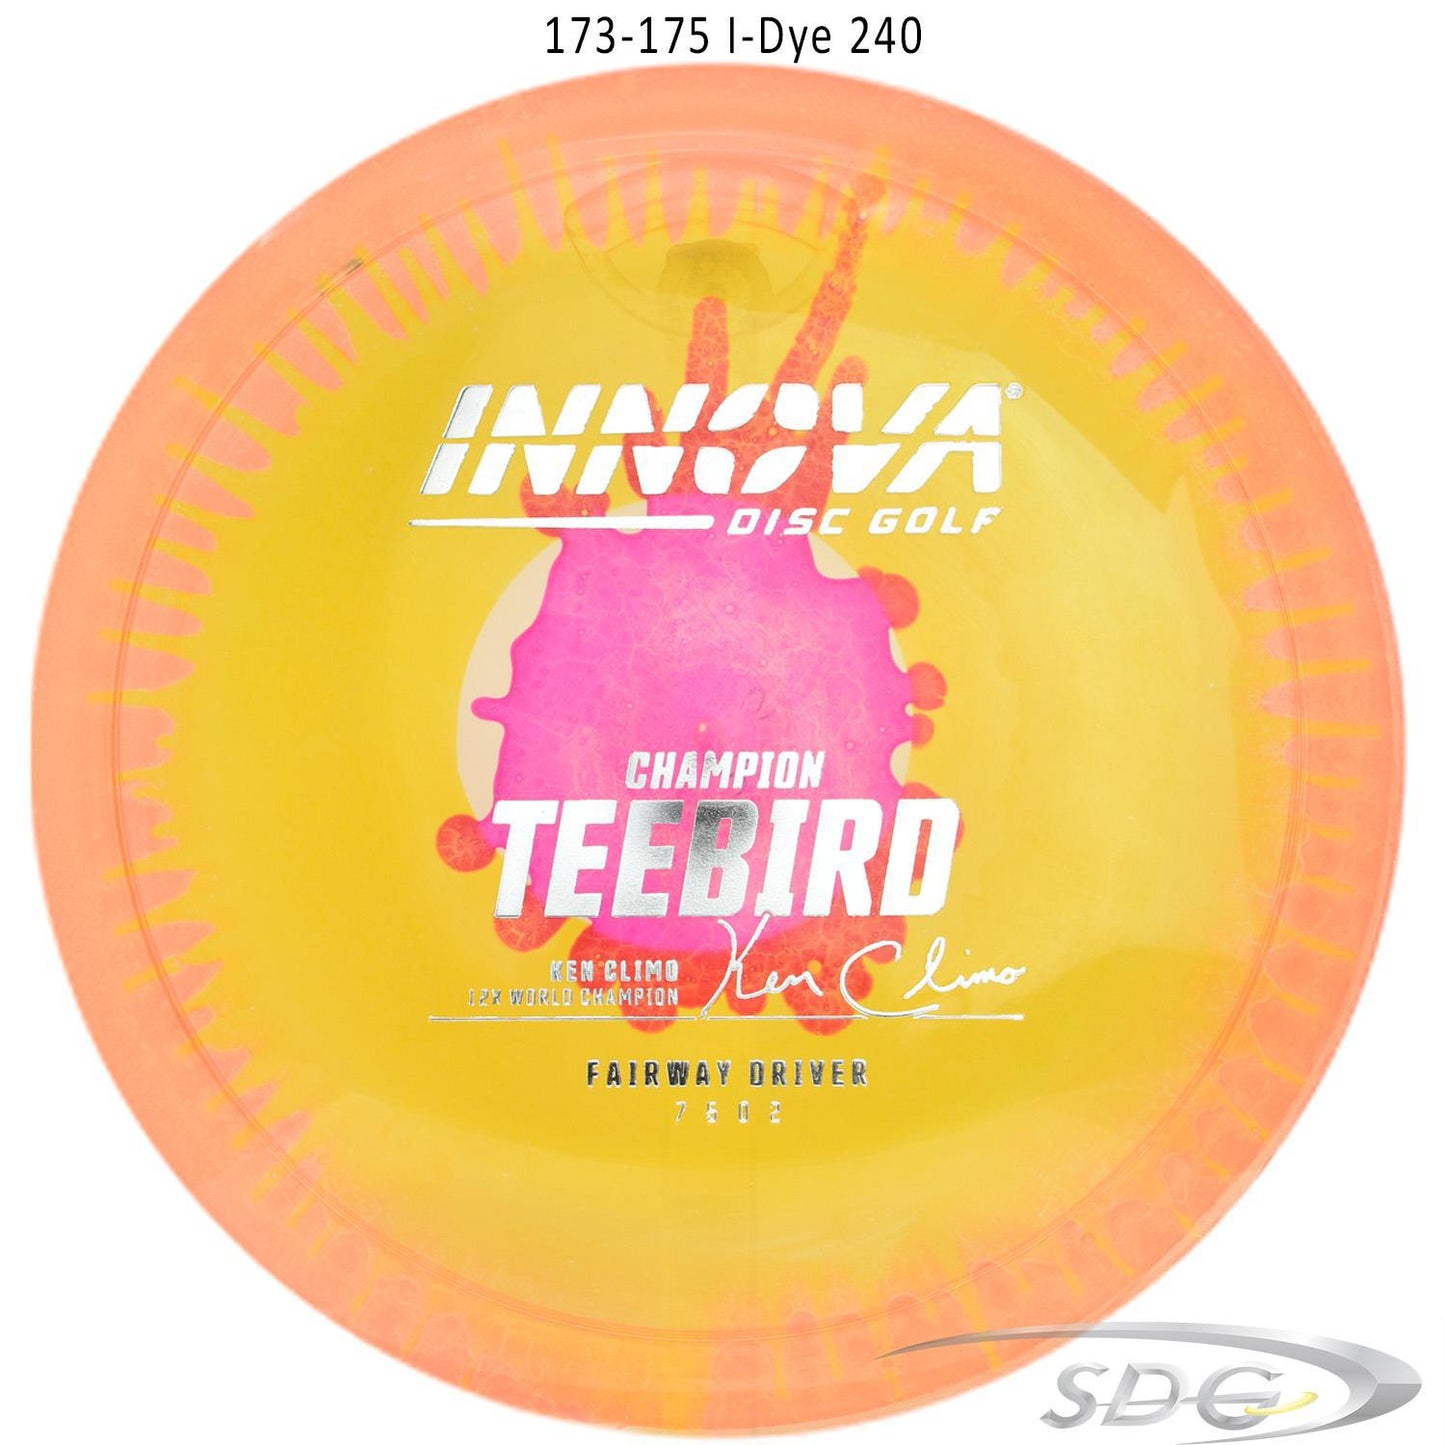 innova-champion-teebird-i-dye-disc-golf-fairway-driver 173-175 I-Dye 240 